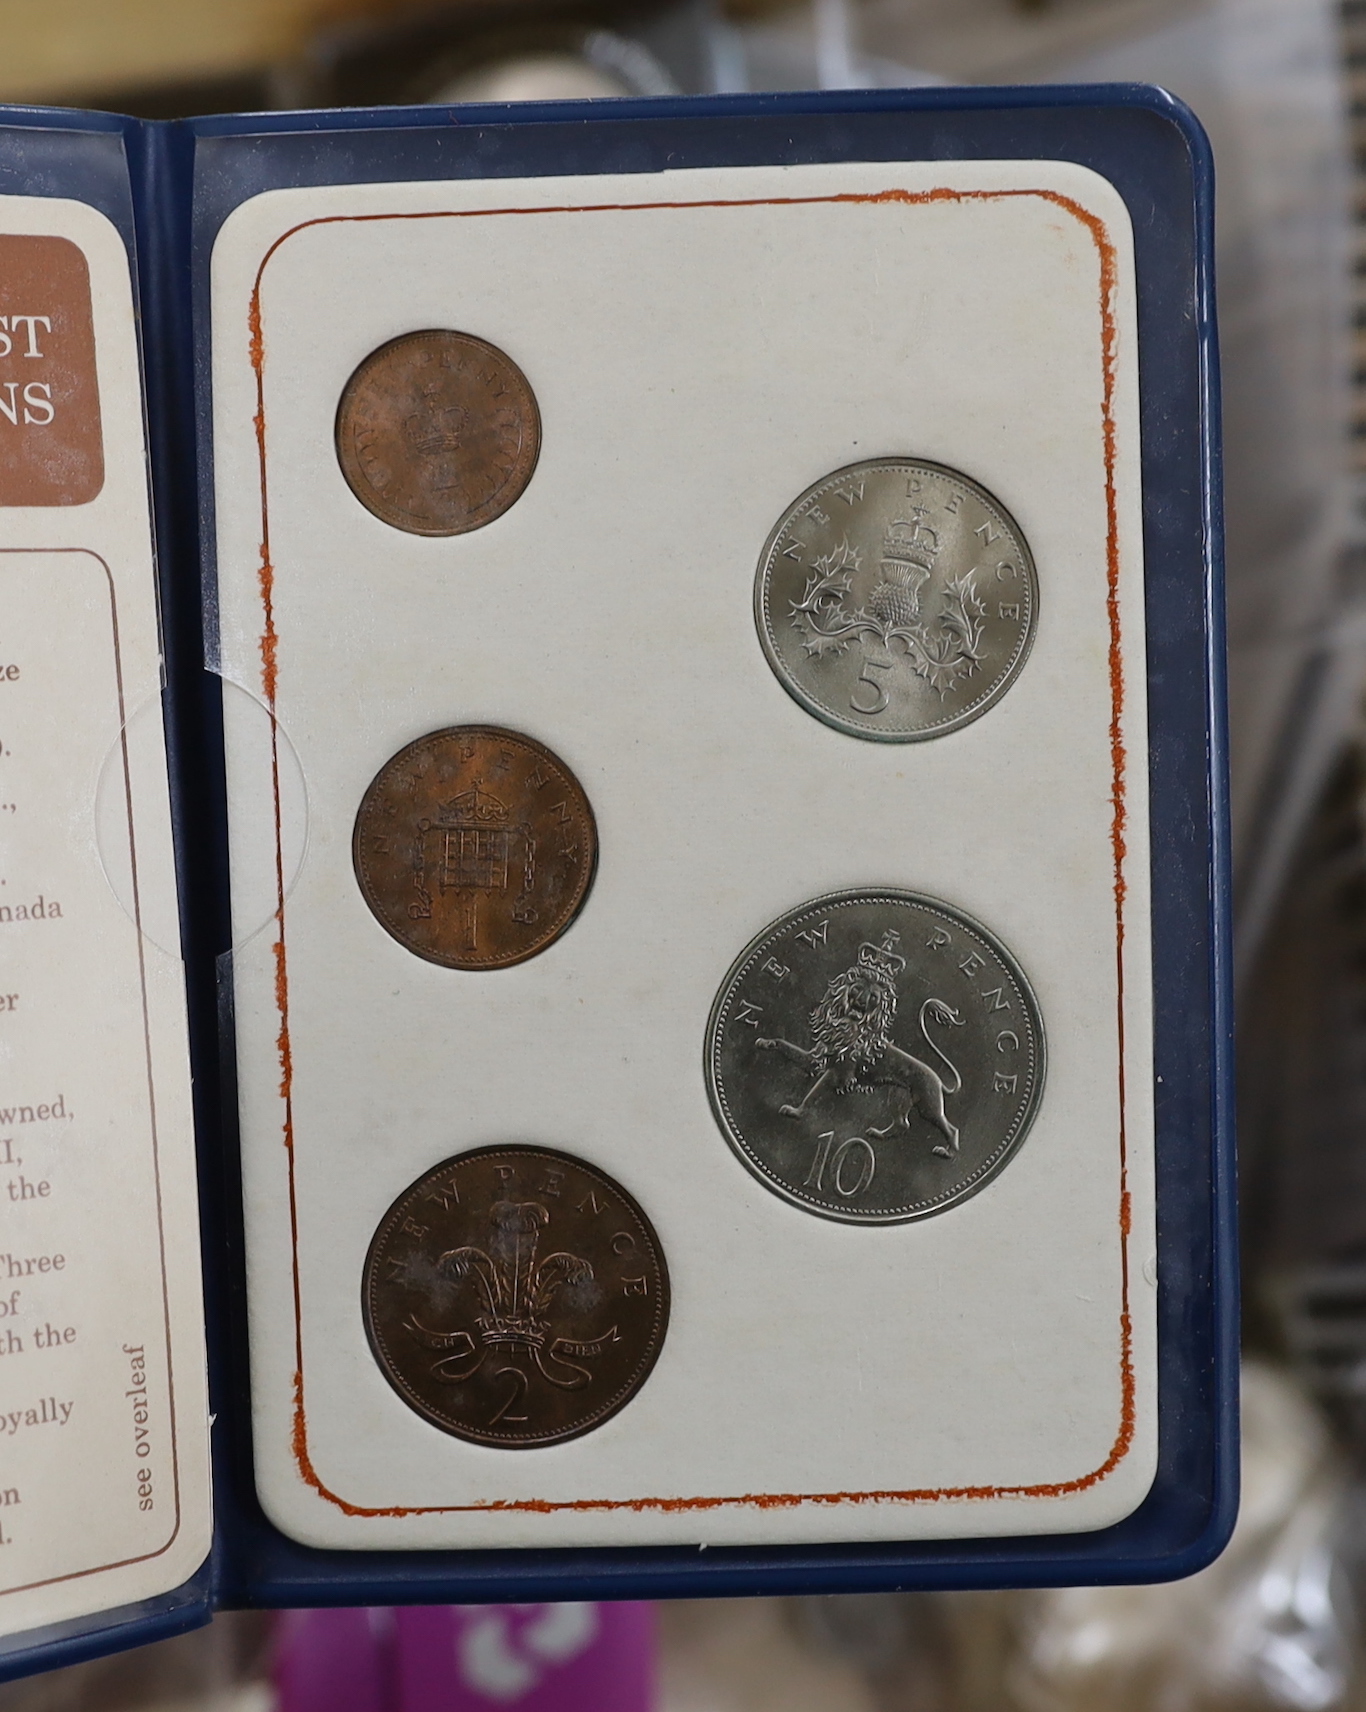 British coins, George VI to QEII including commemorative crowns, decimal coins sets, etc.